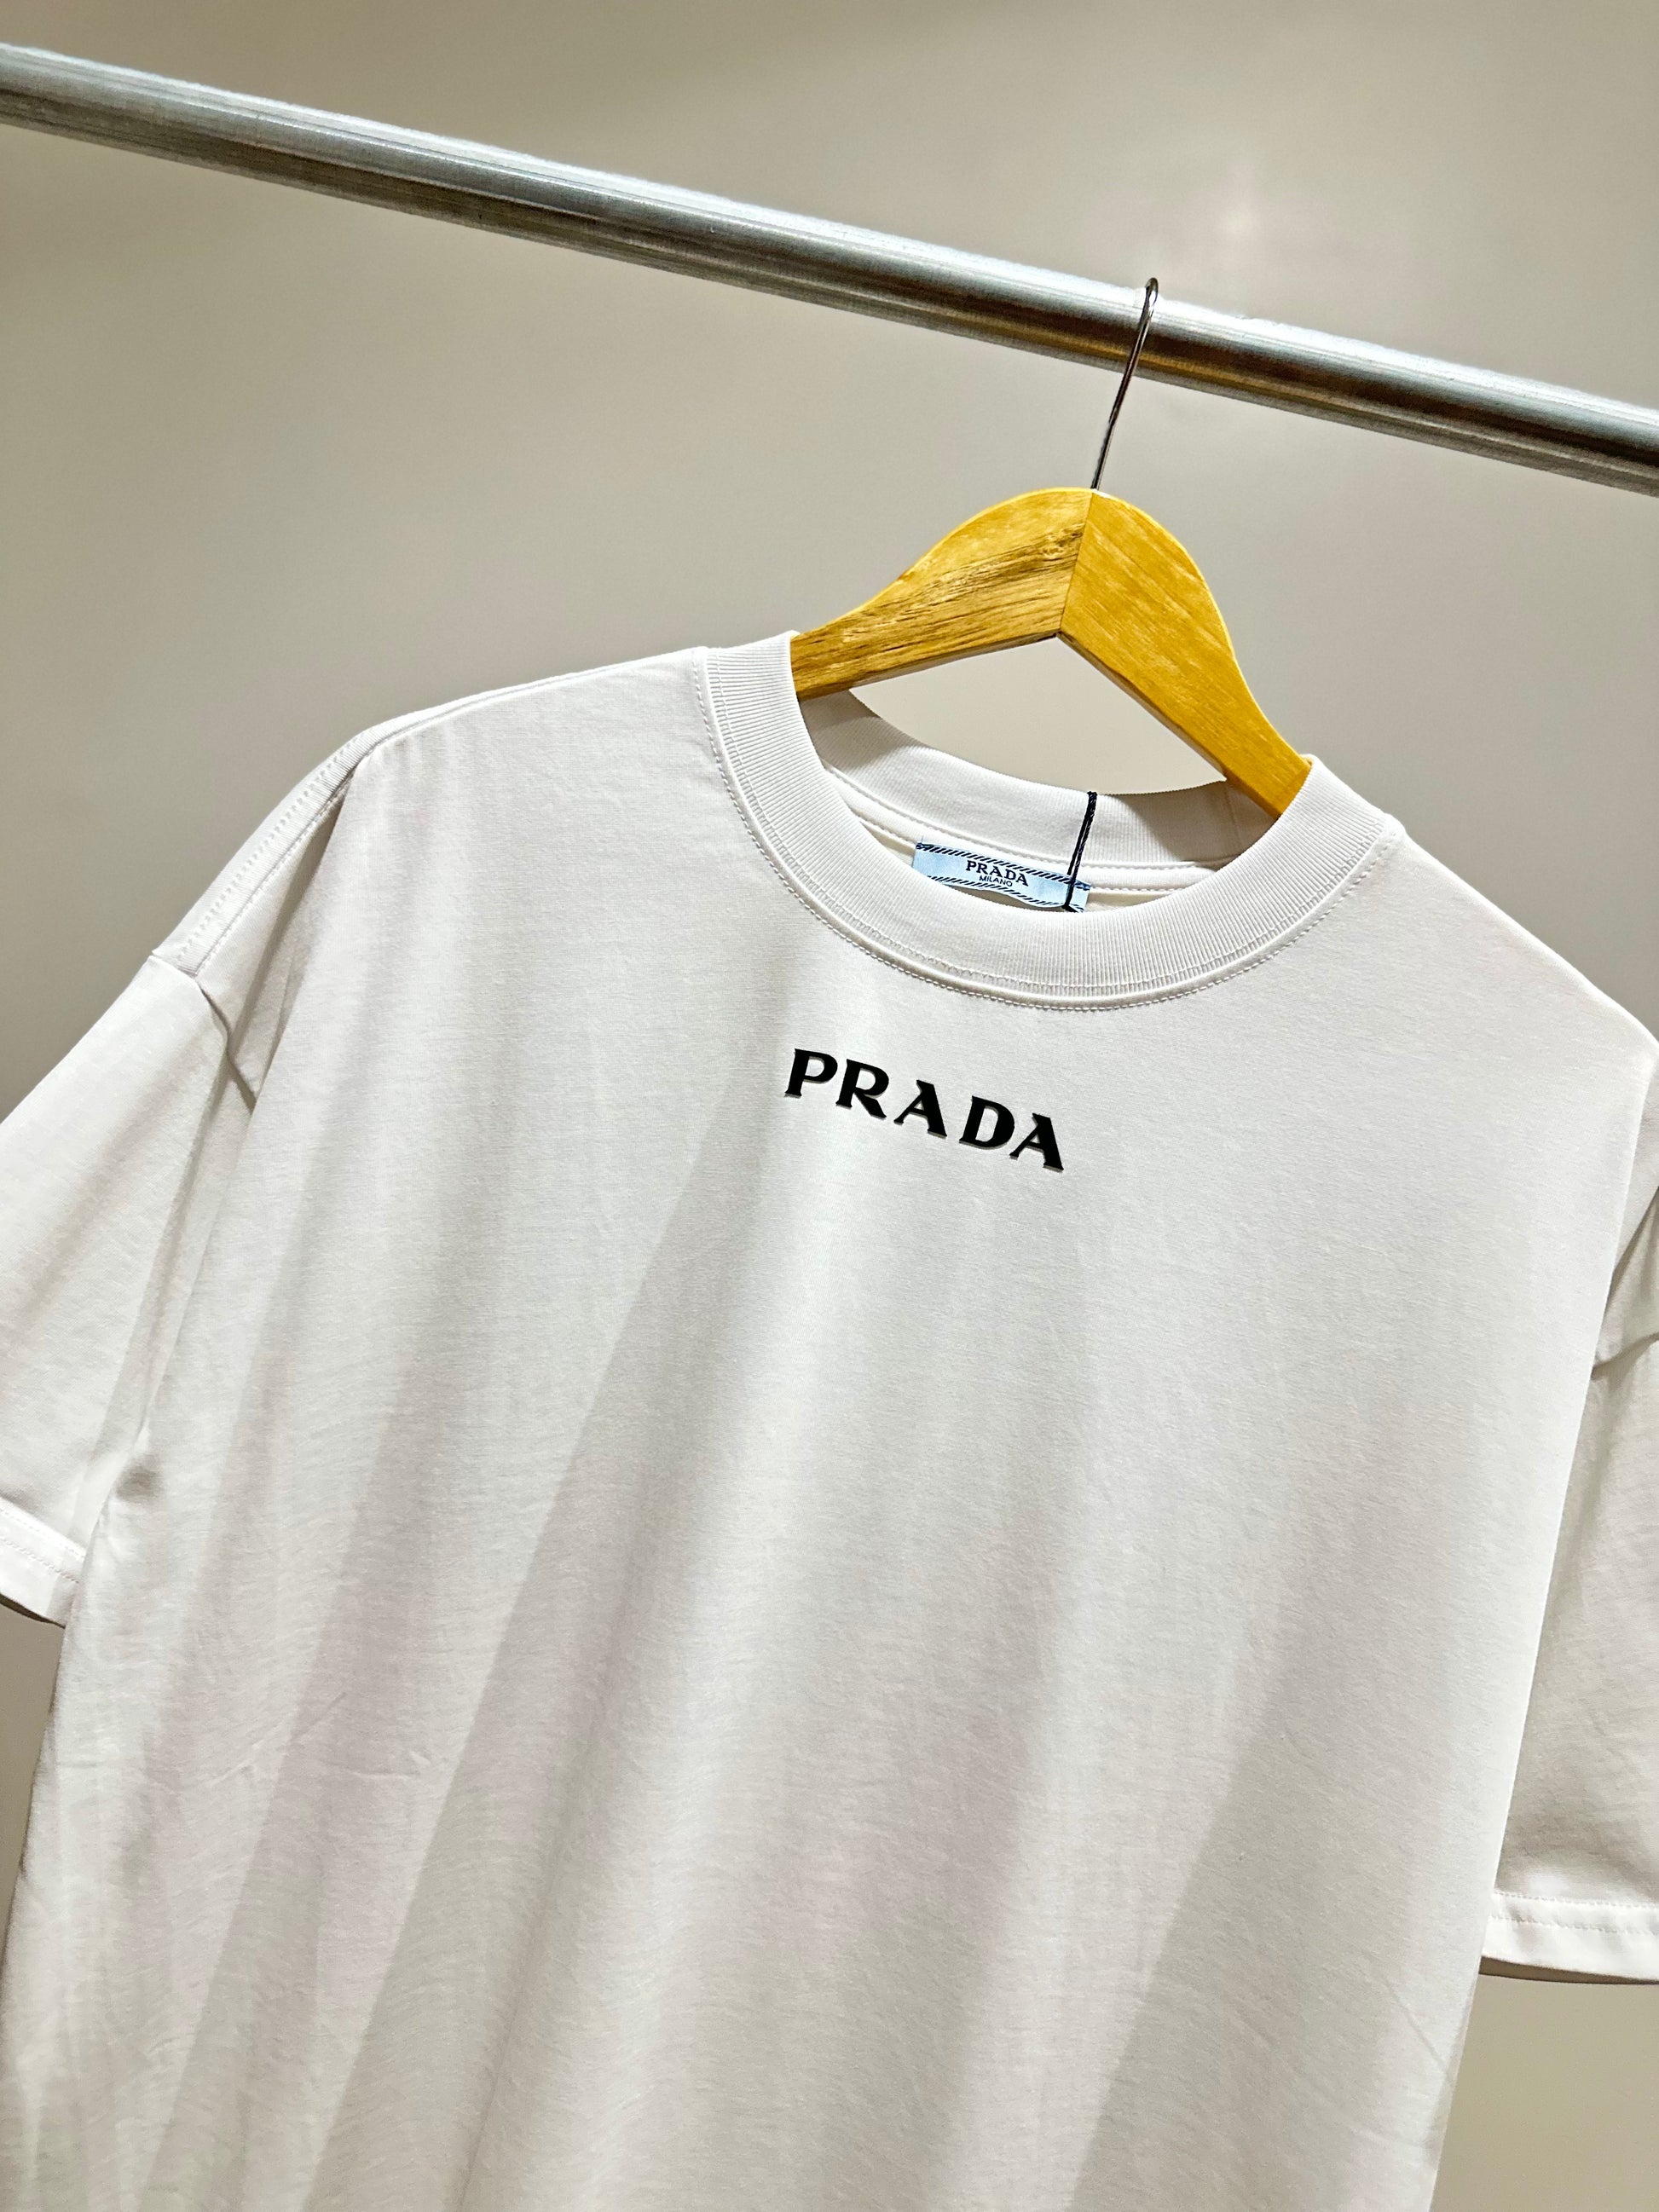 Shop PRADA Classic Re-Nylon and jersey T-shirt front pocket UJN661